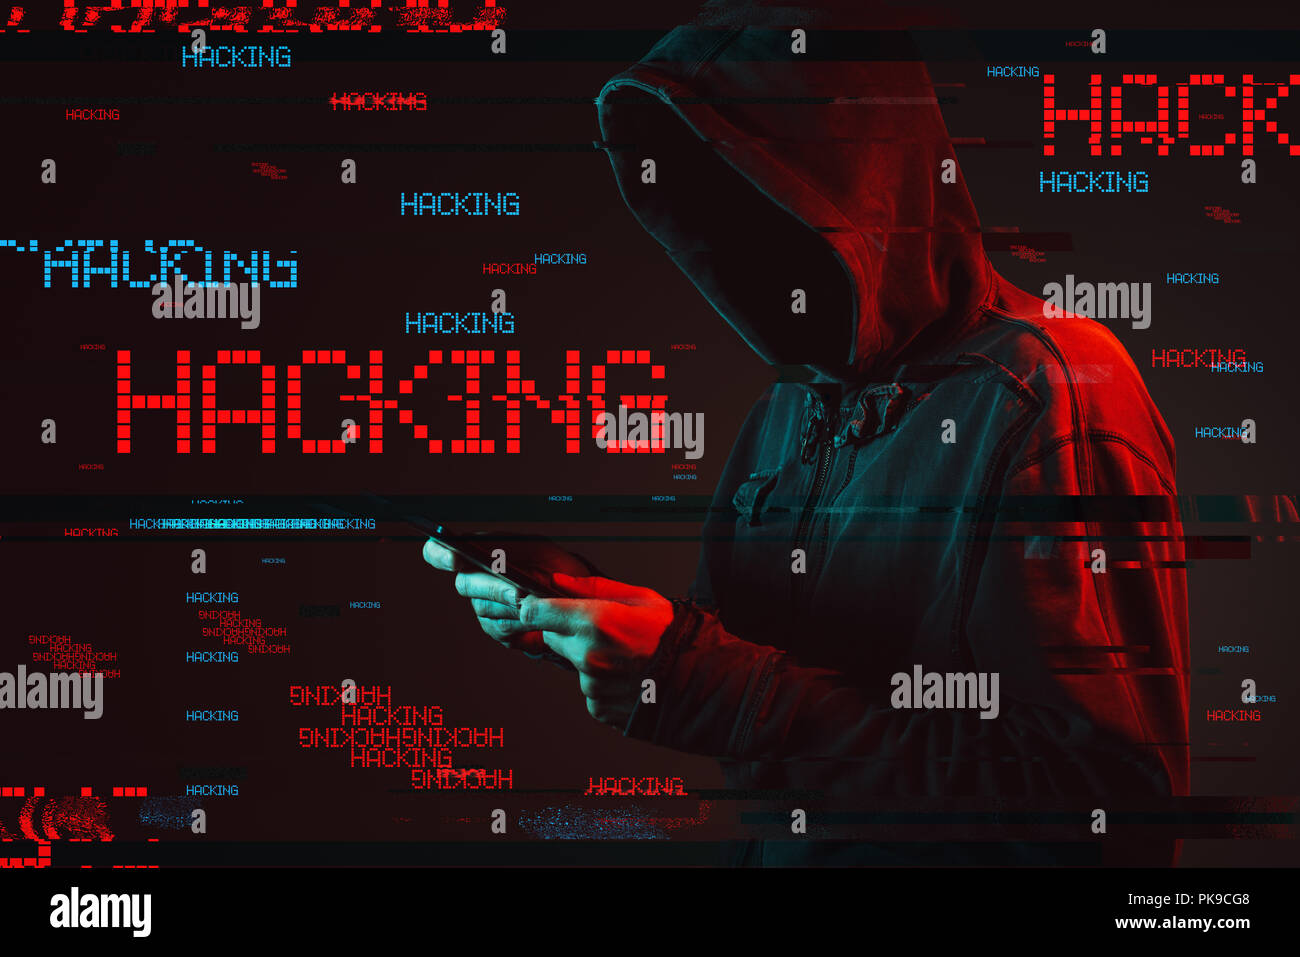 18+] Hacker Glitch Wallpapers - WallpaperSafari